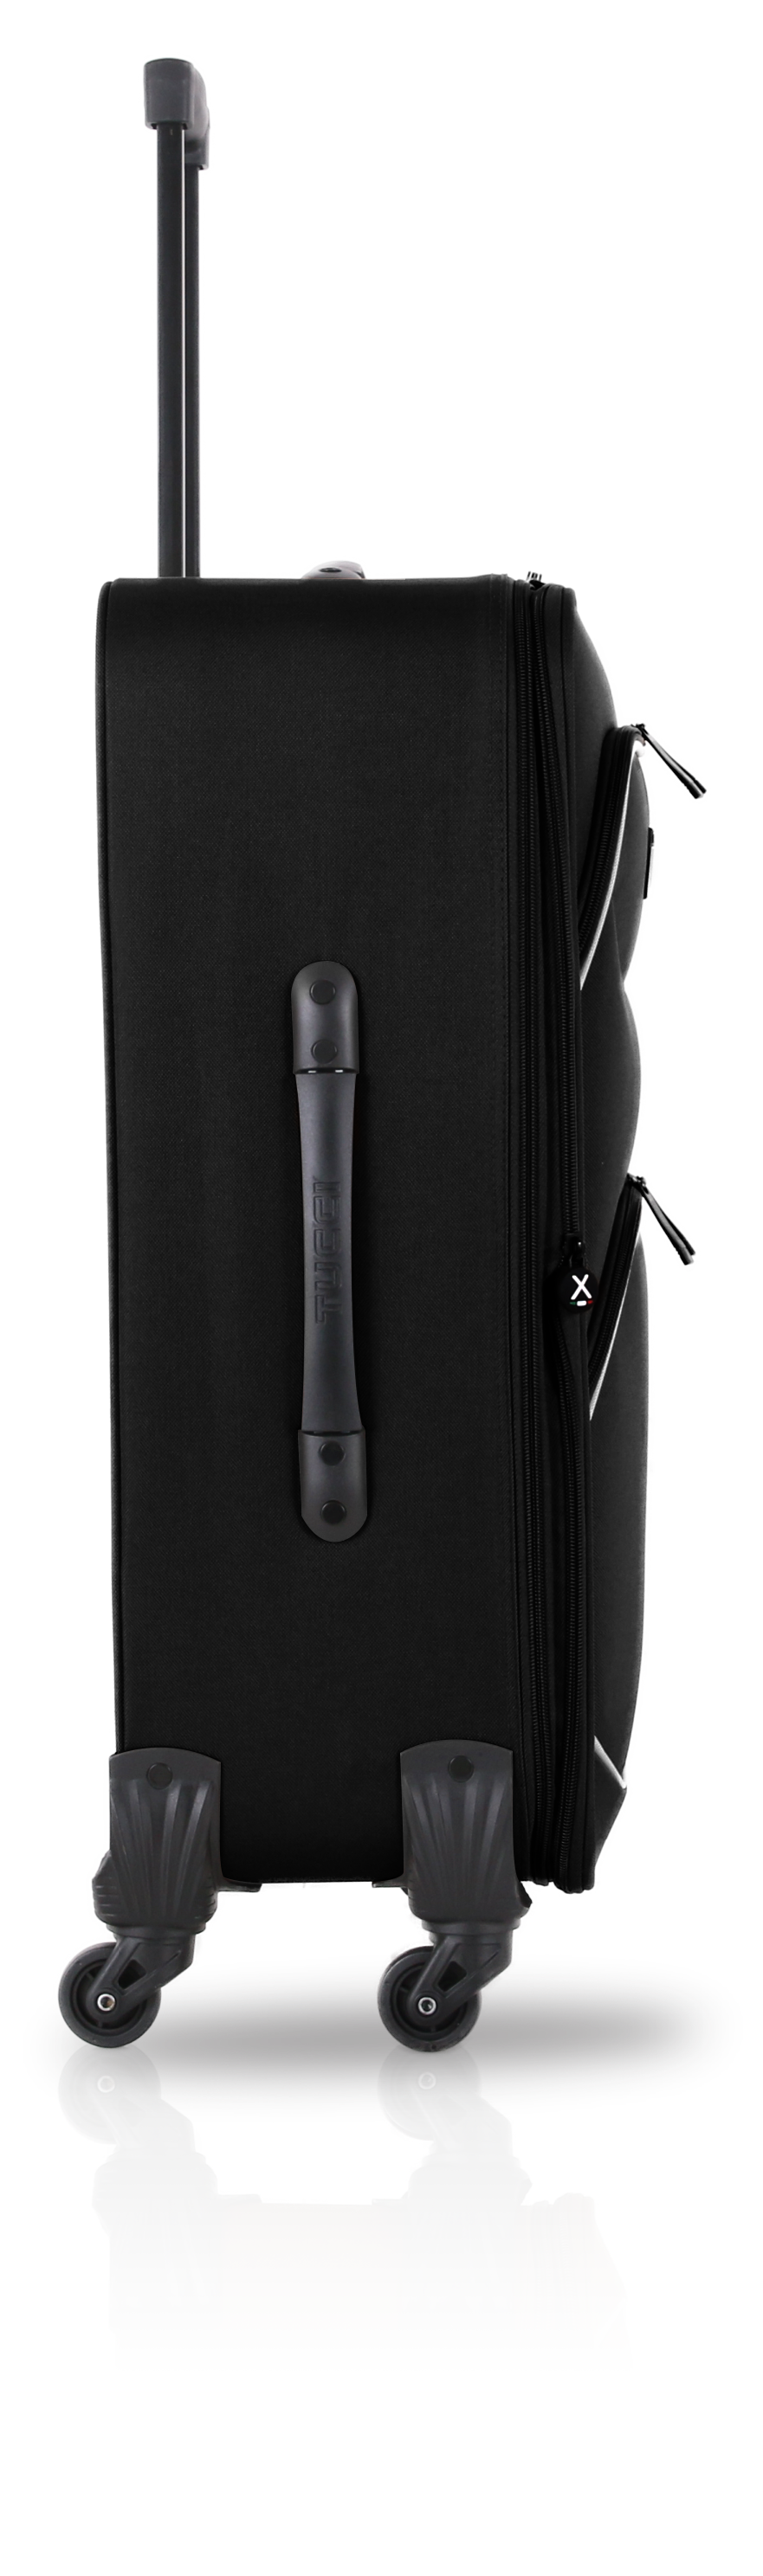 TUCCI BEN FATTO 24" Medium Luggage Suitcase